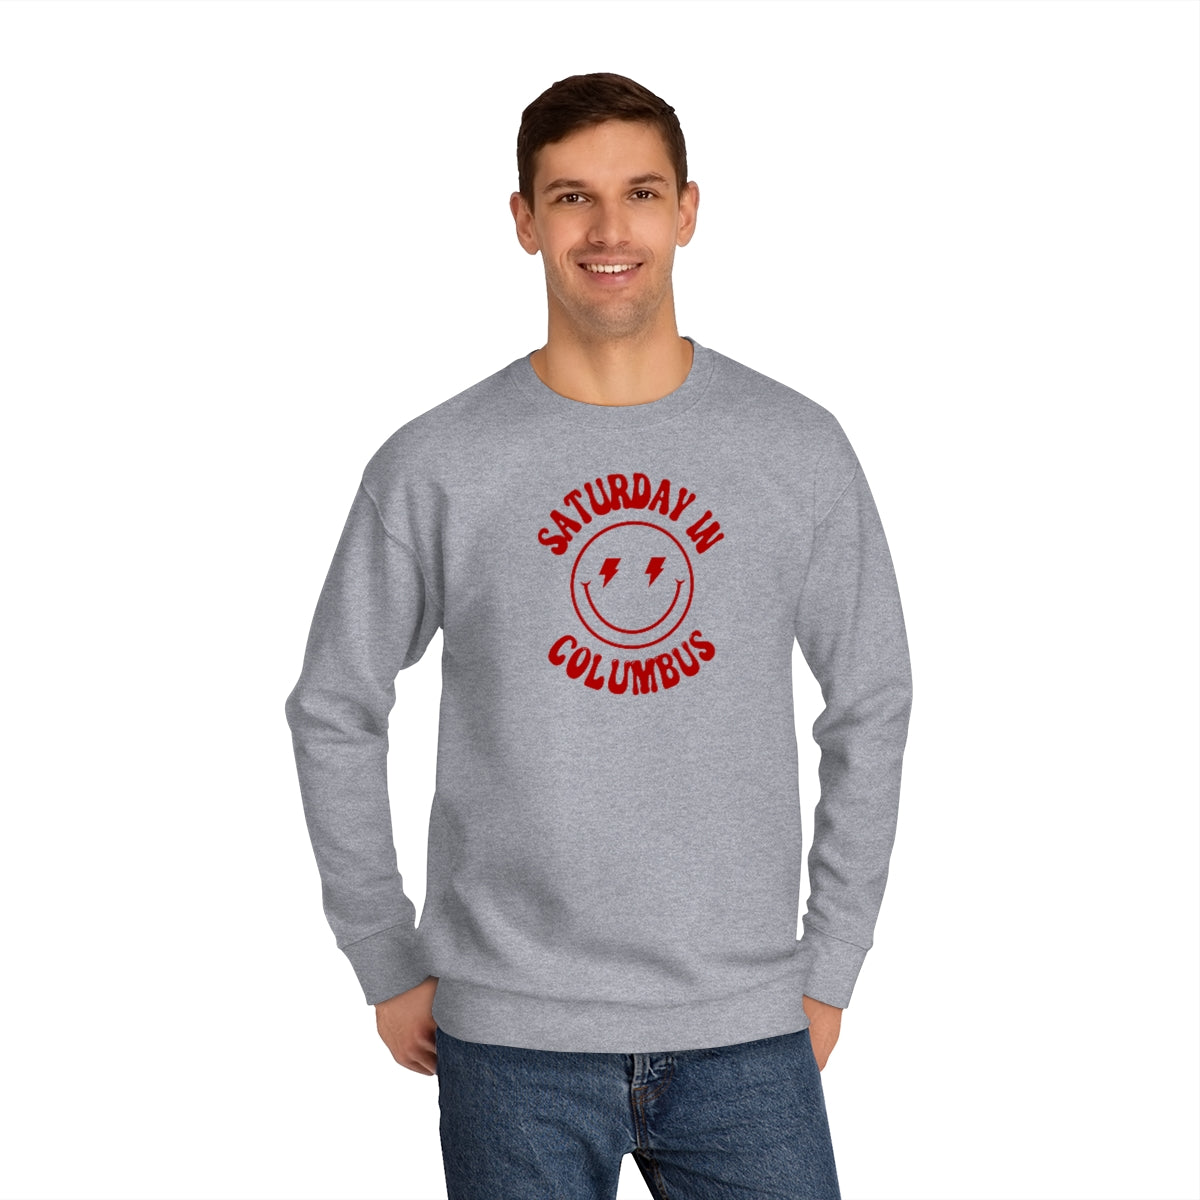 Smiley Columbus Crew Sweatshirt - GG - CH